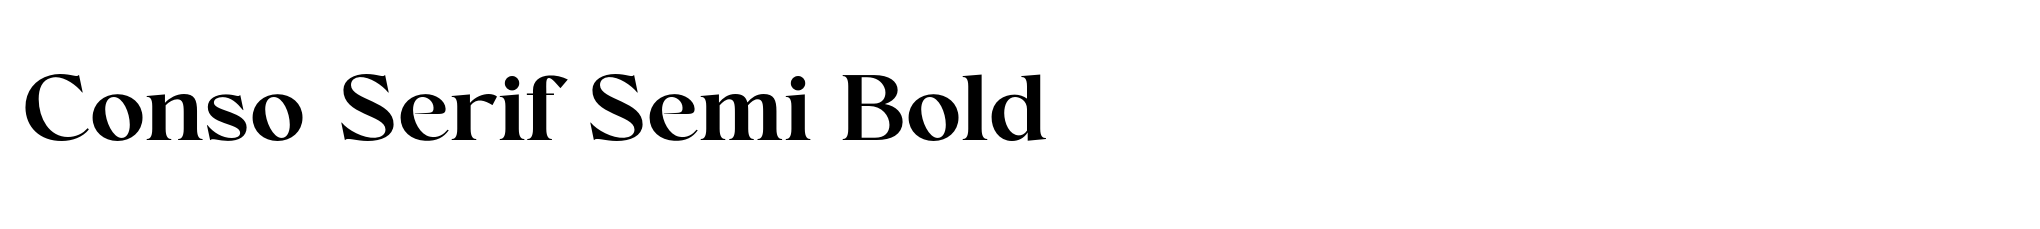 Conso Serif Semi Bold image